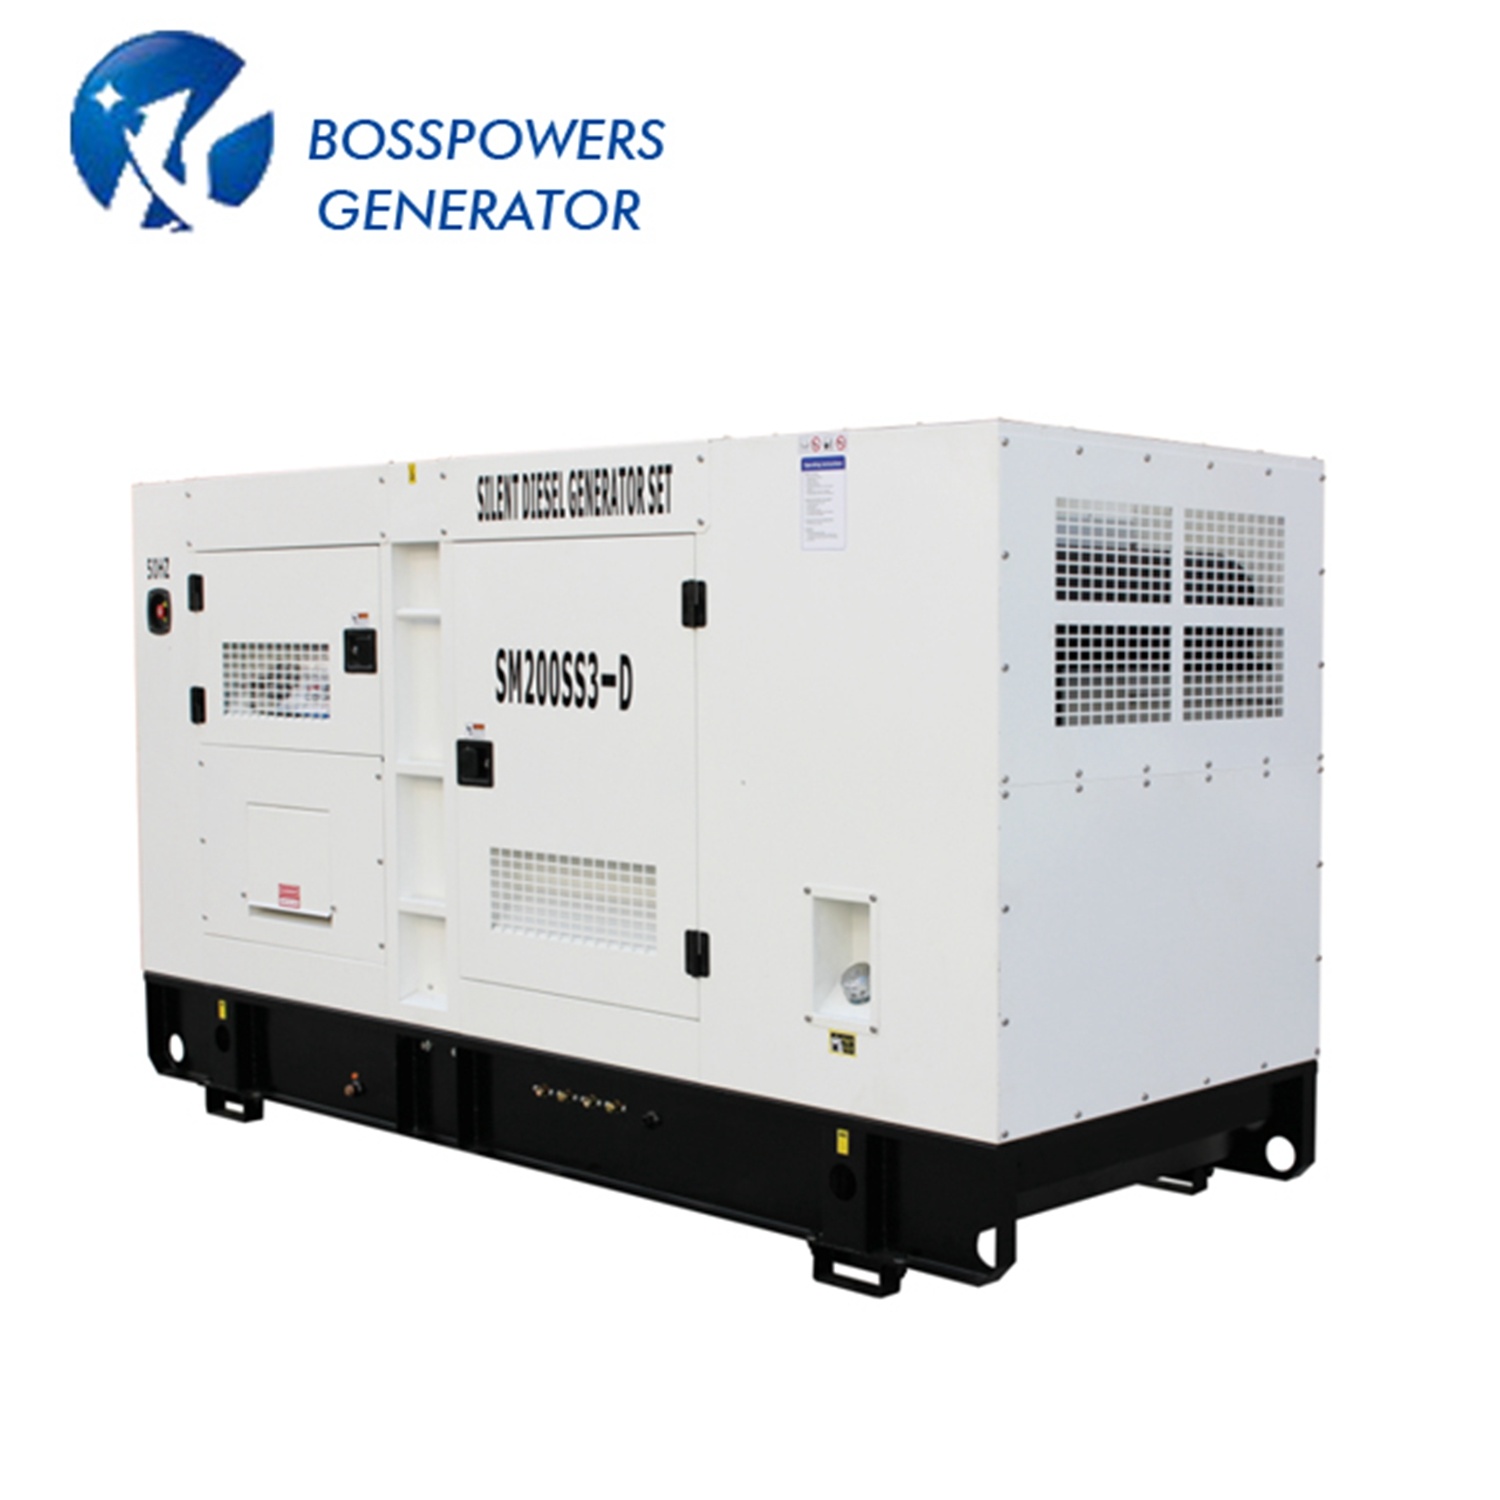 Kaipu Electrical Power Diesel Generator 500kw with Datakom Dkg309 Controller